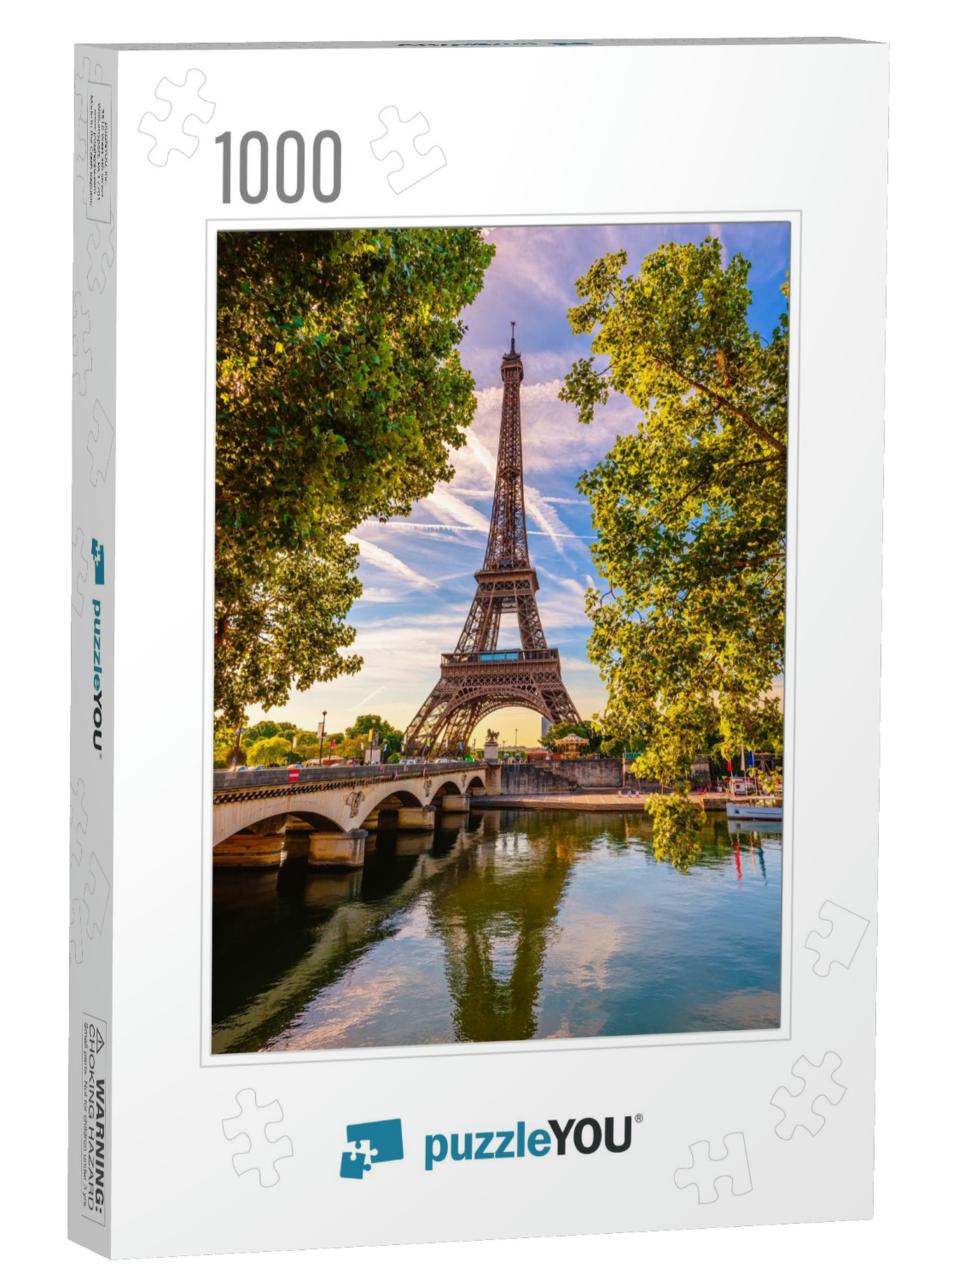 Paris Eiffel Tower & River Seine in Paris, France. Eiffel... Jigsaw Puzzle with 1000 pieces